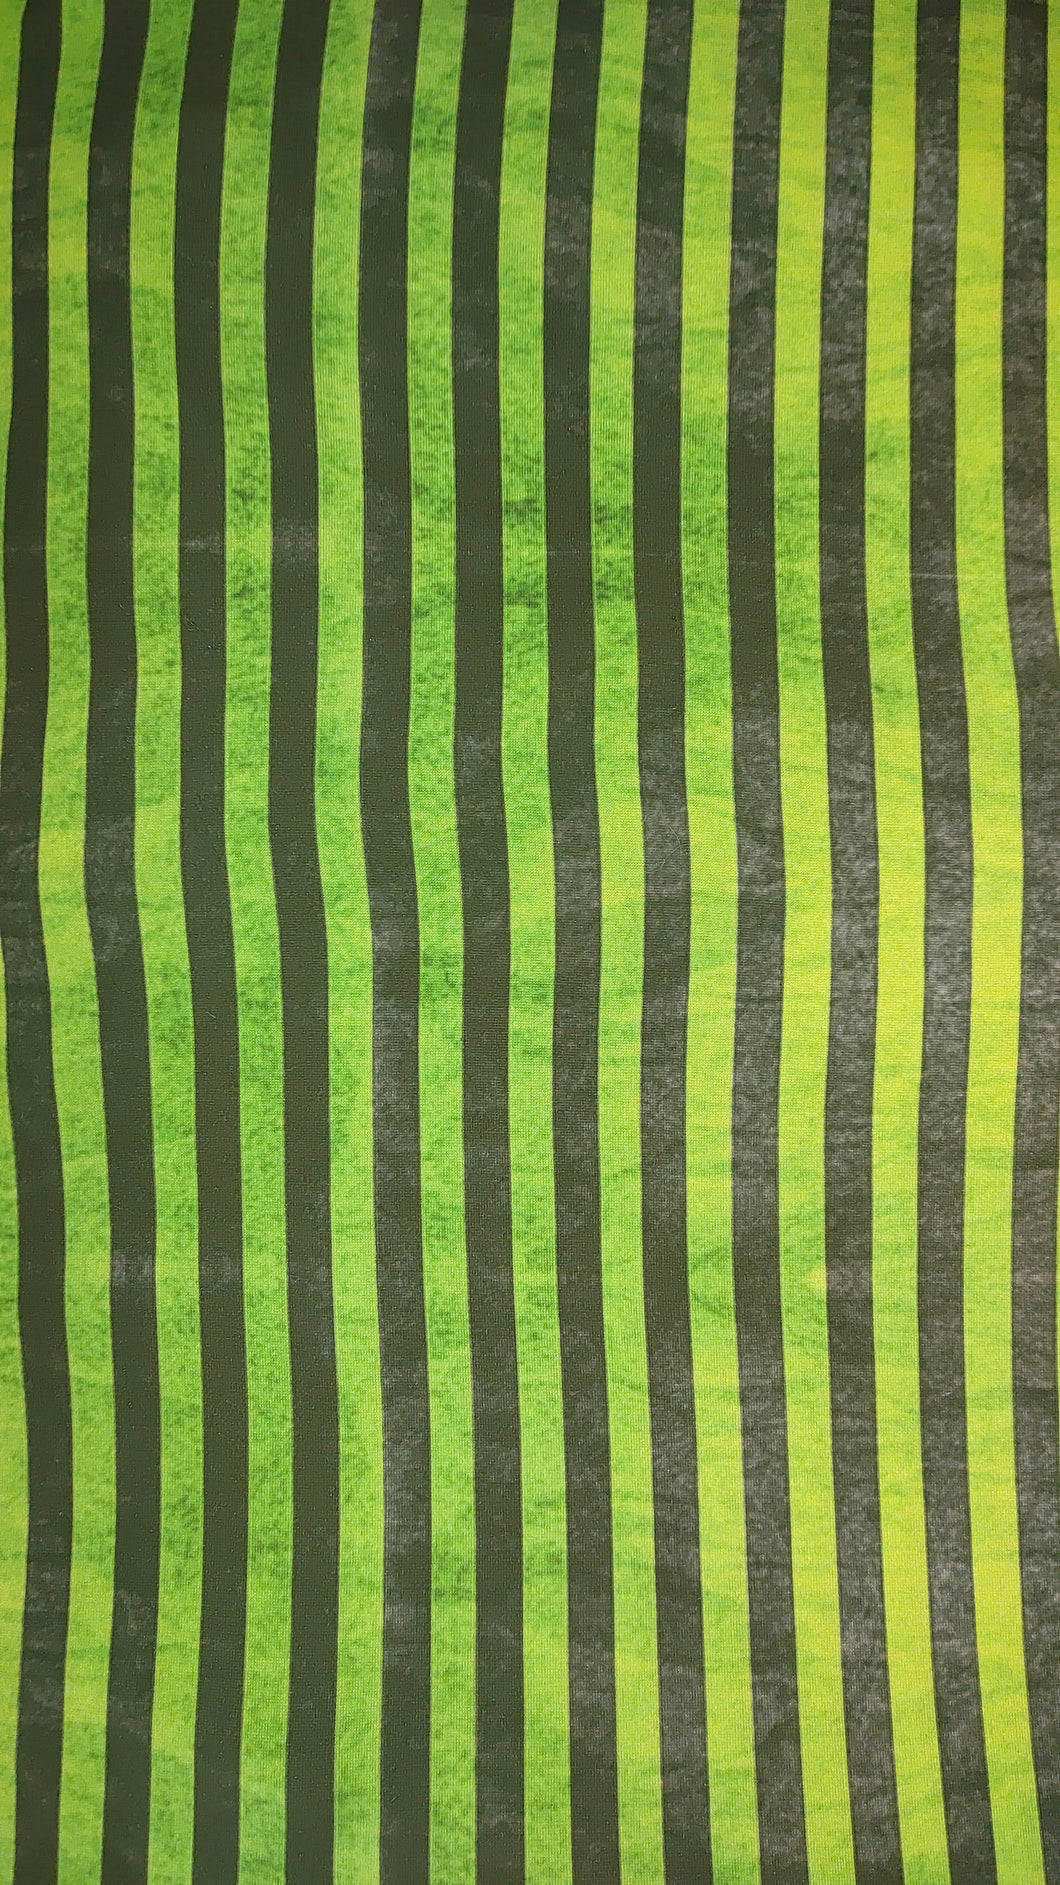 Green beetle stripes (vertical)